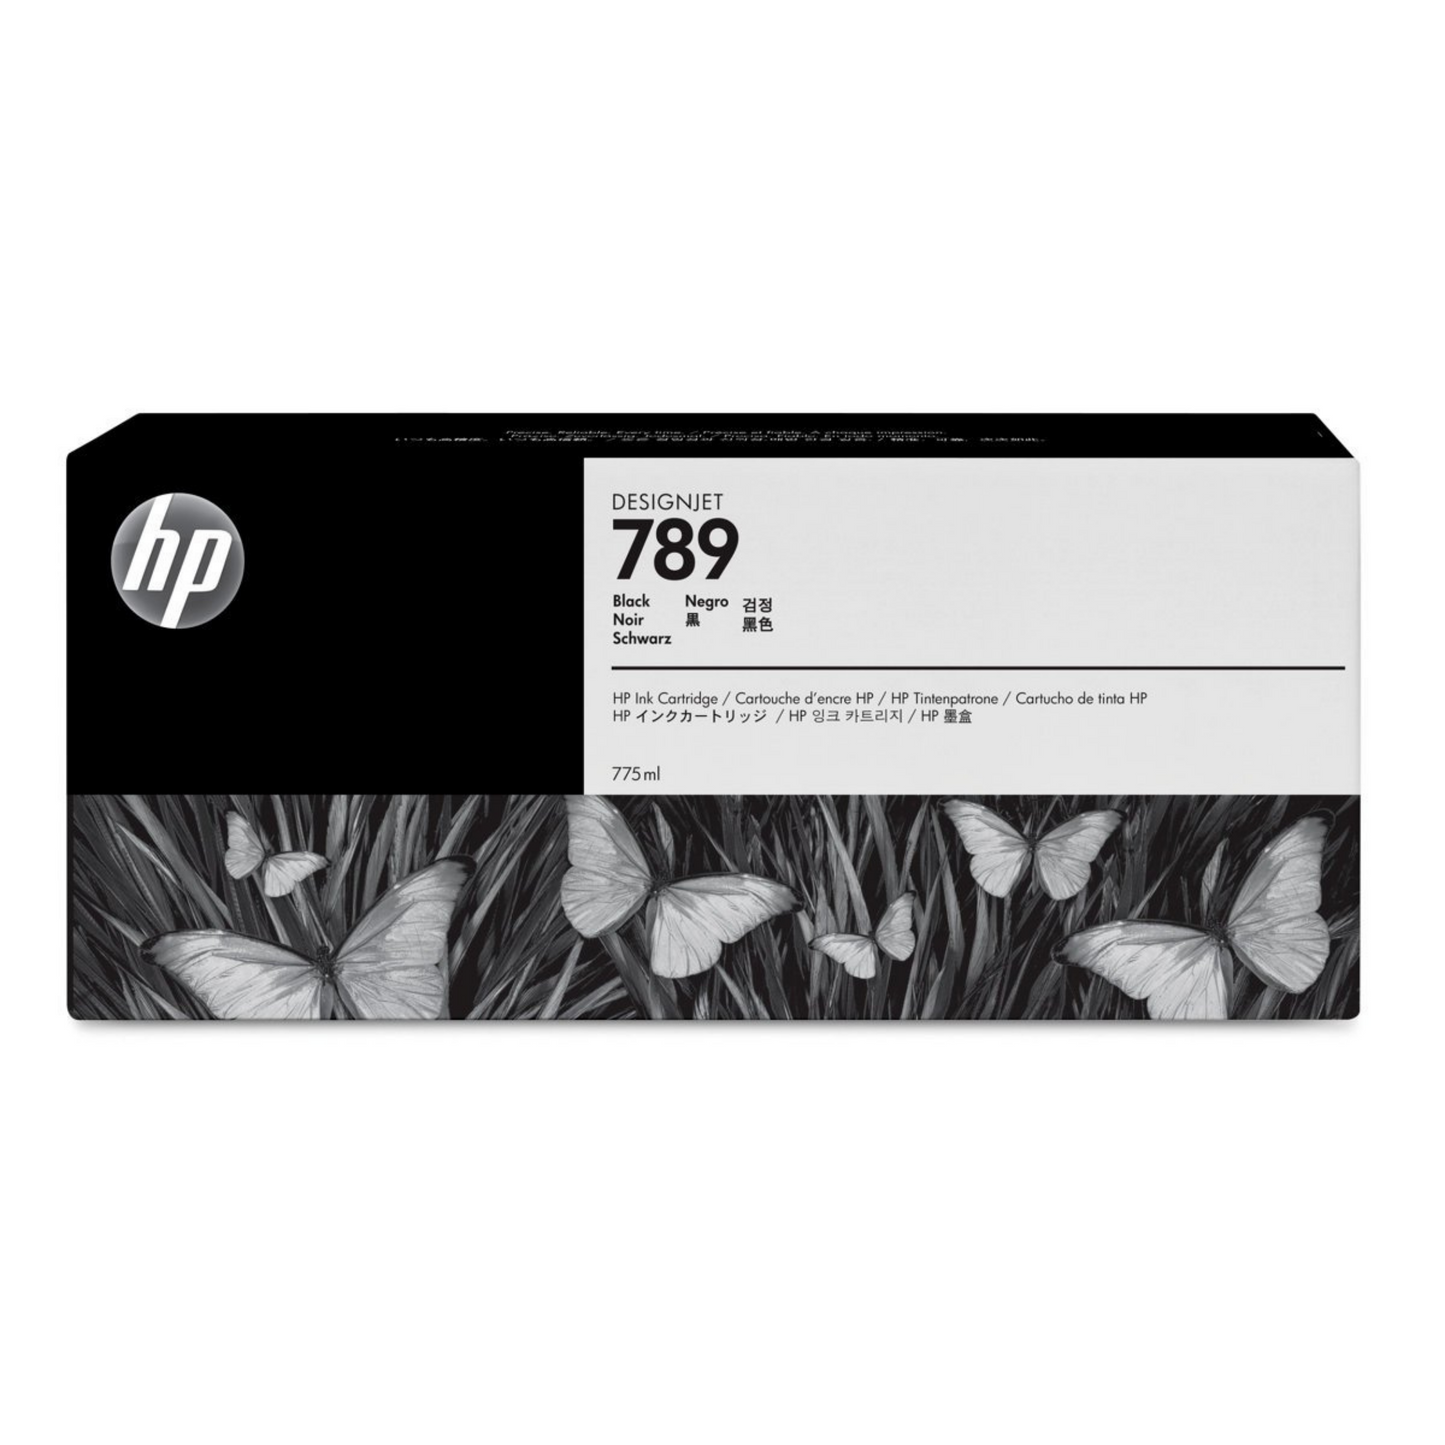 HP 789 CARTUCHO NEGRO DESIGNJET 775ML CH615A